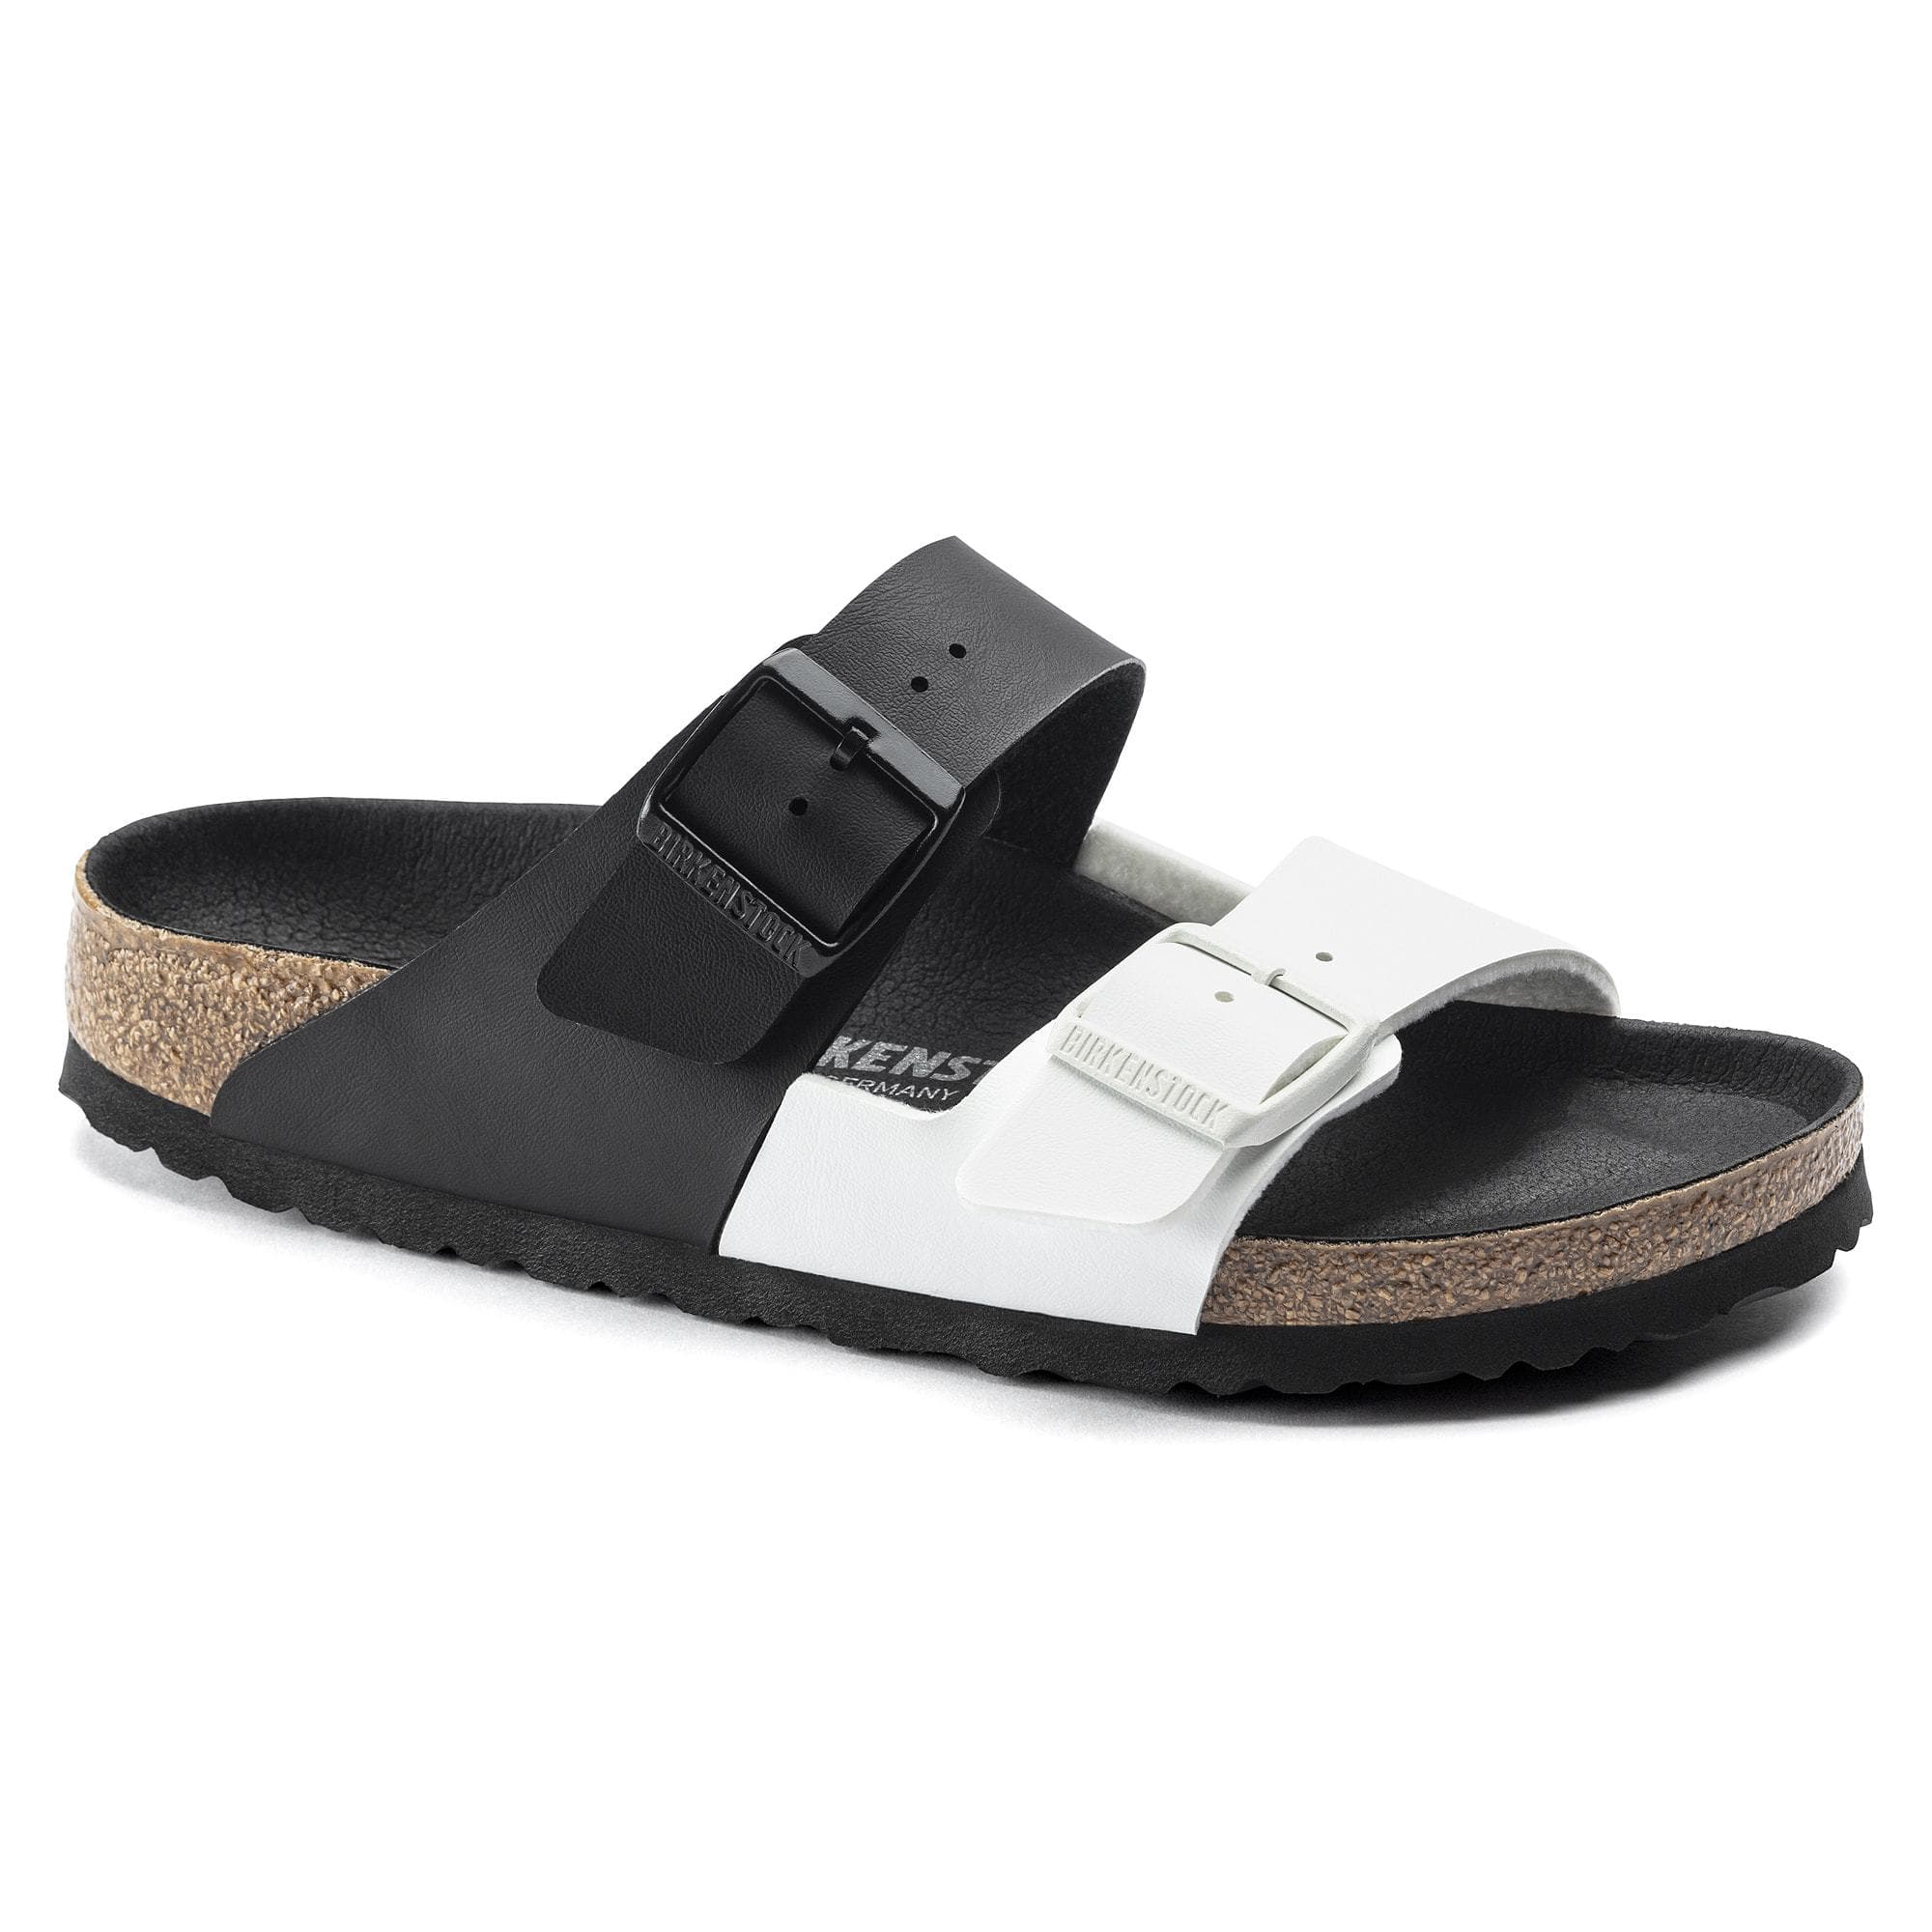 Share 65+ black birkenstock sandals latest